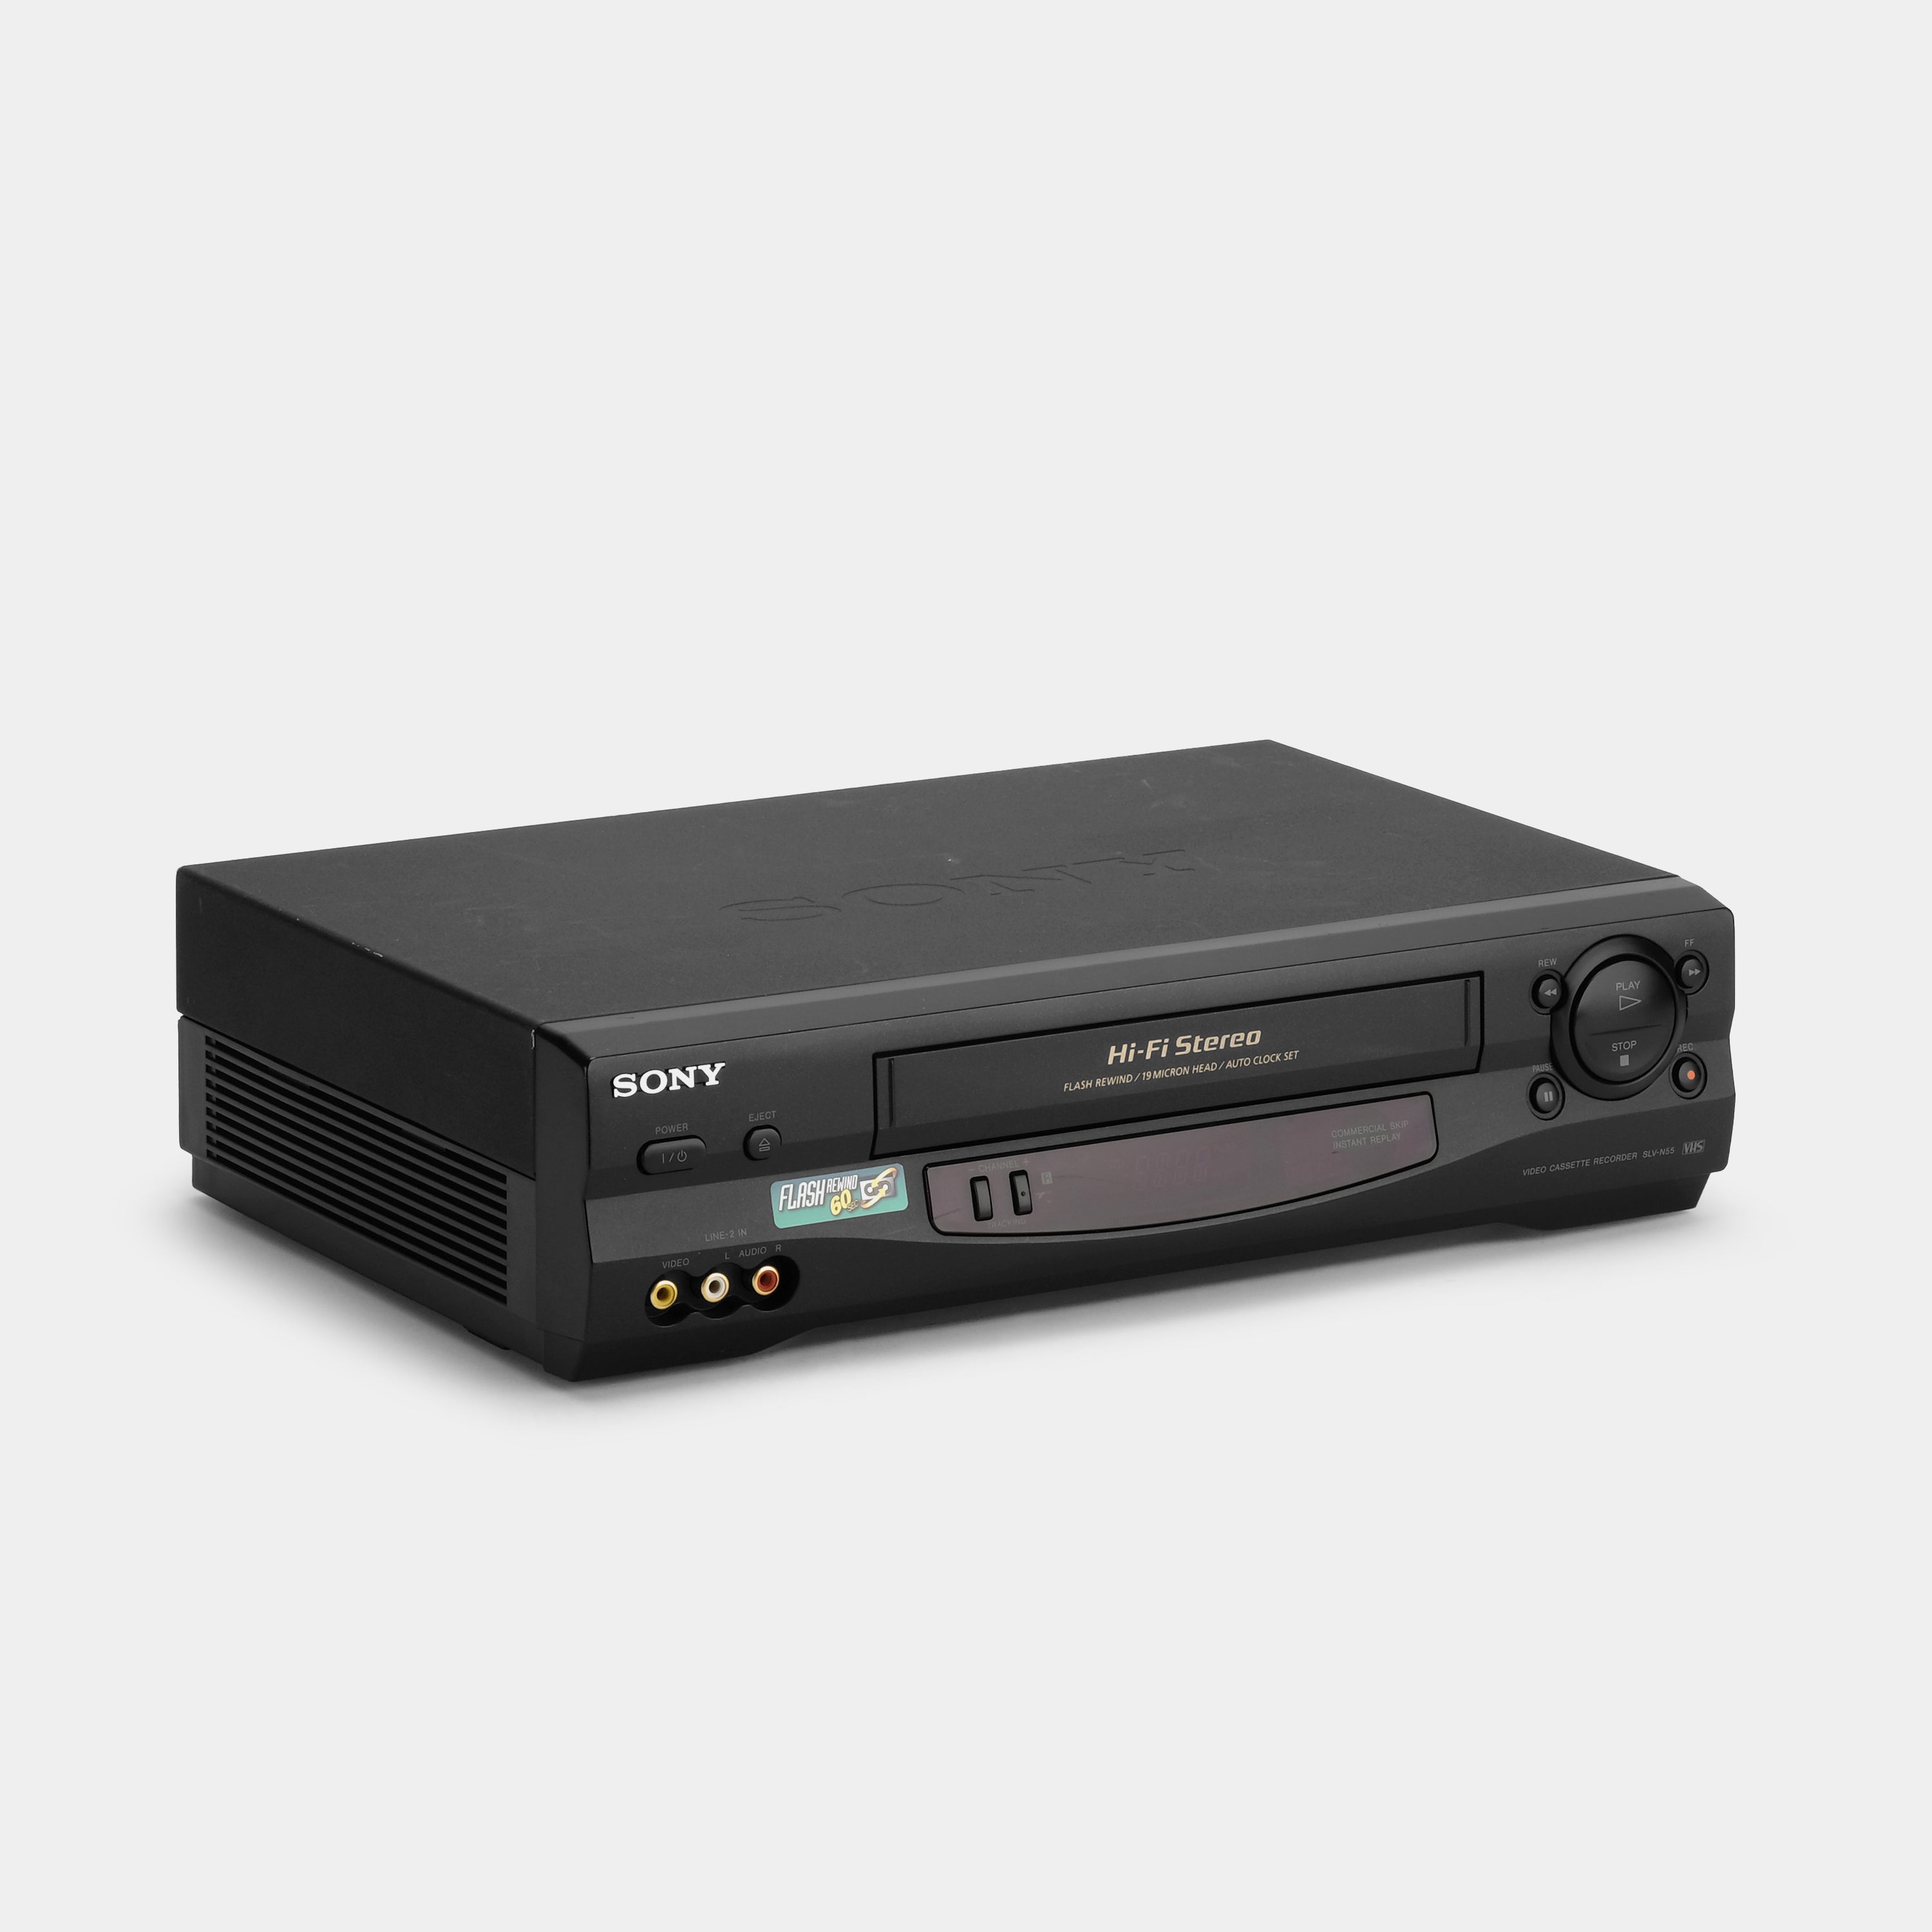 Sony SLV-N55 VCR VHS Player